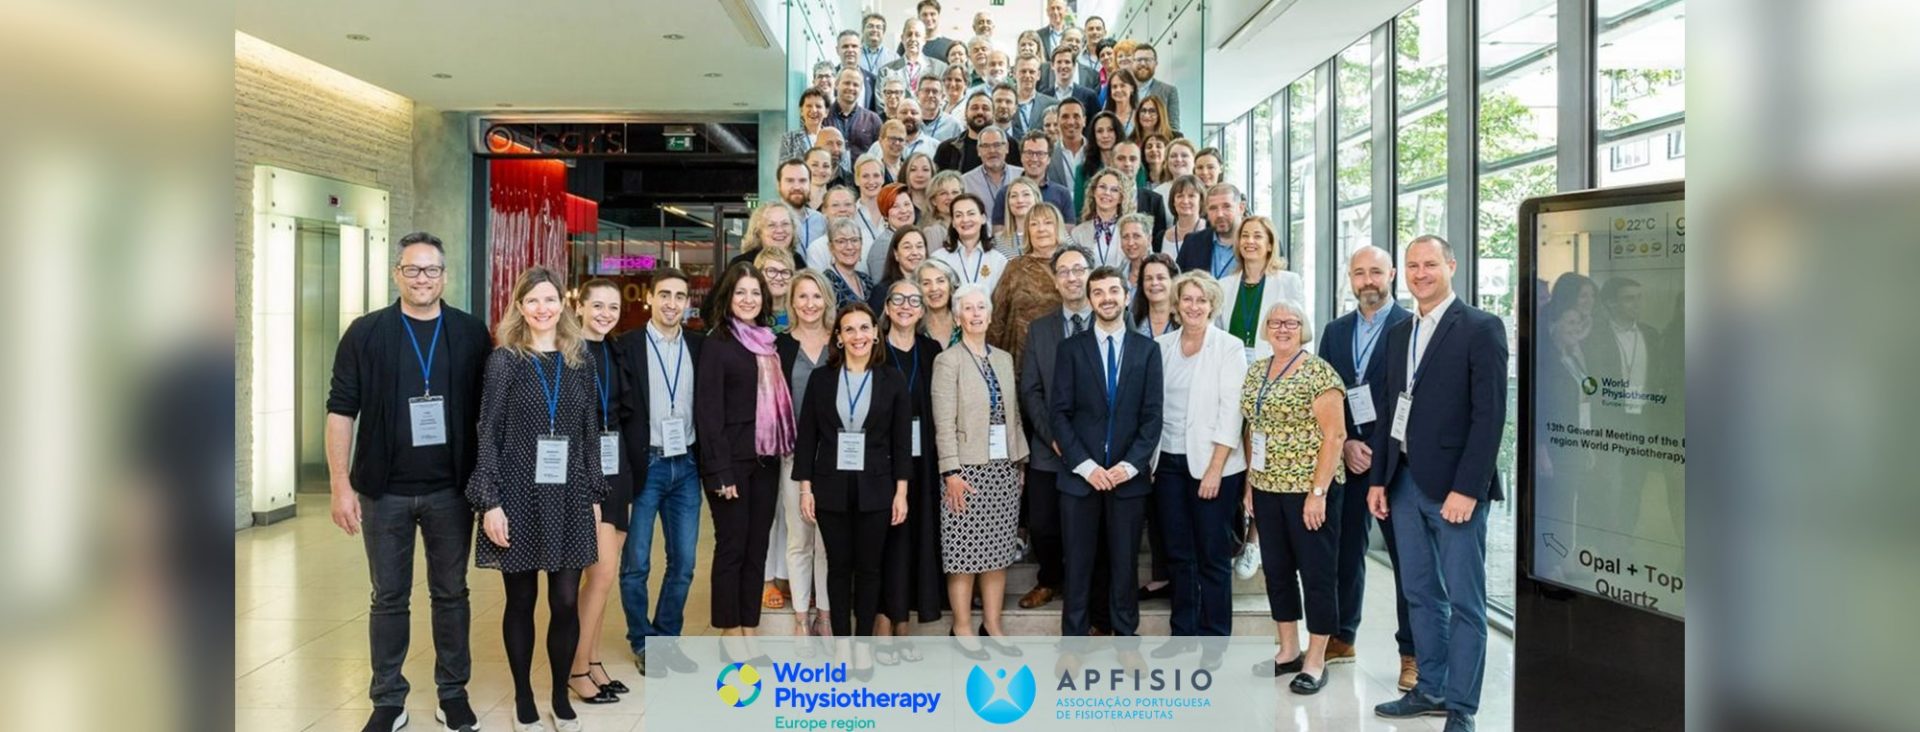 <p>APFISIO na Europe Region World Physiotherapy</p>
